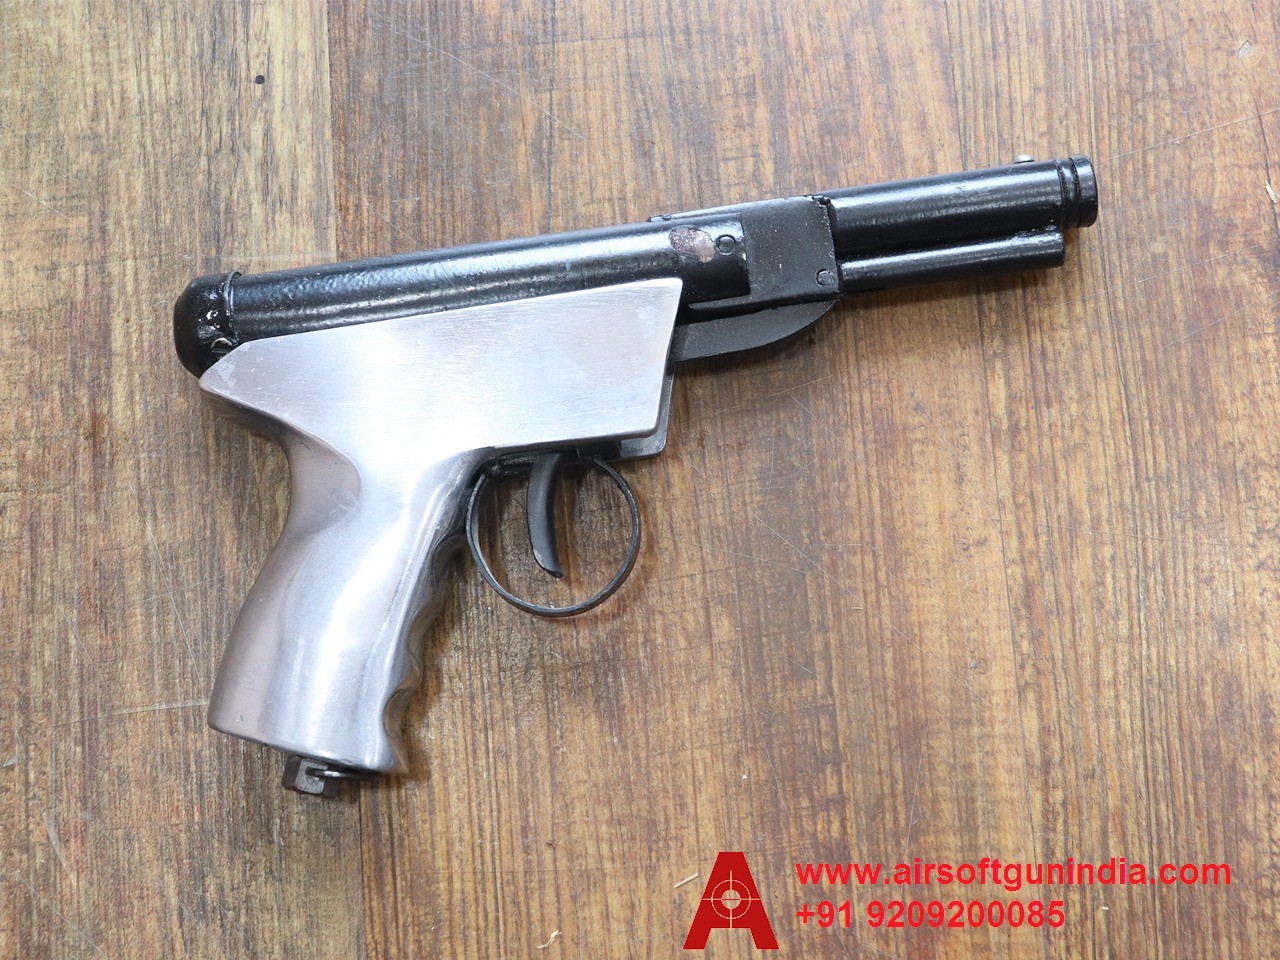 Bond Champion Silver Single-Shot .177 Caliber / 4.5 Mm Indian Air Pistol By Airsoft Gun India